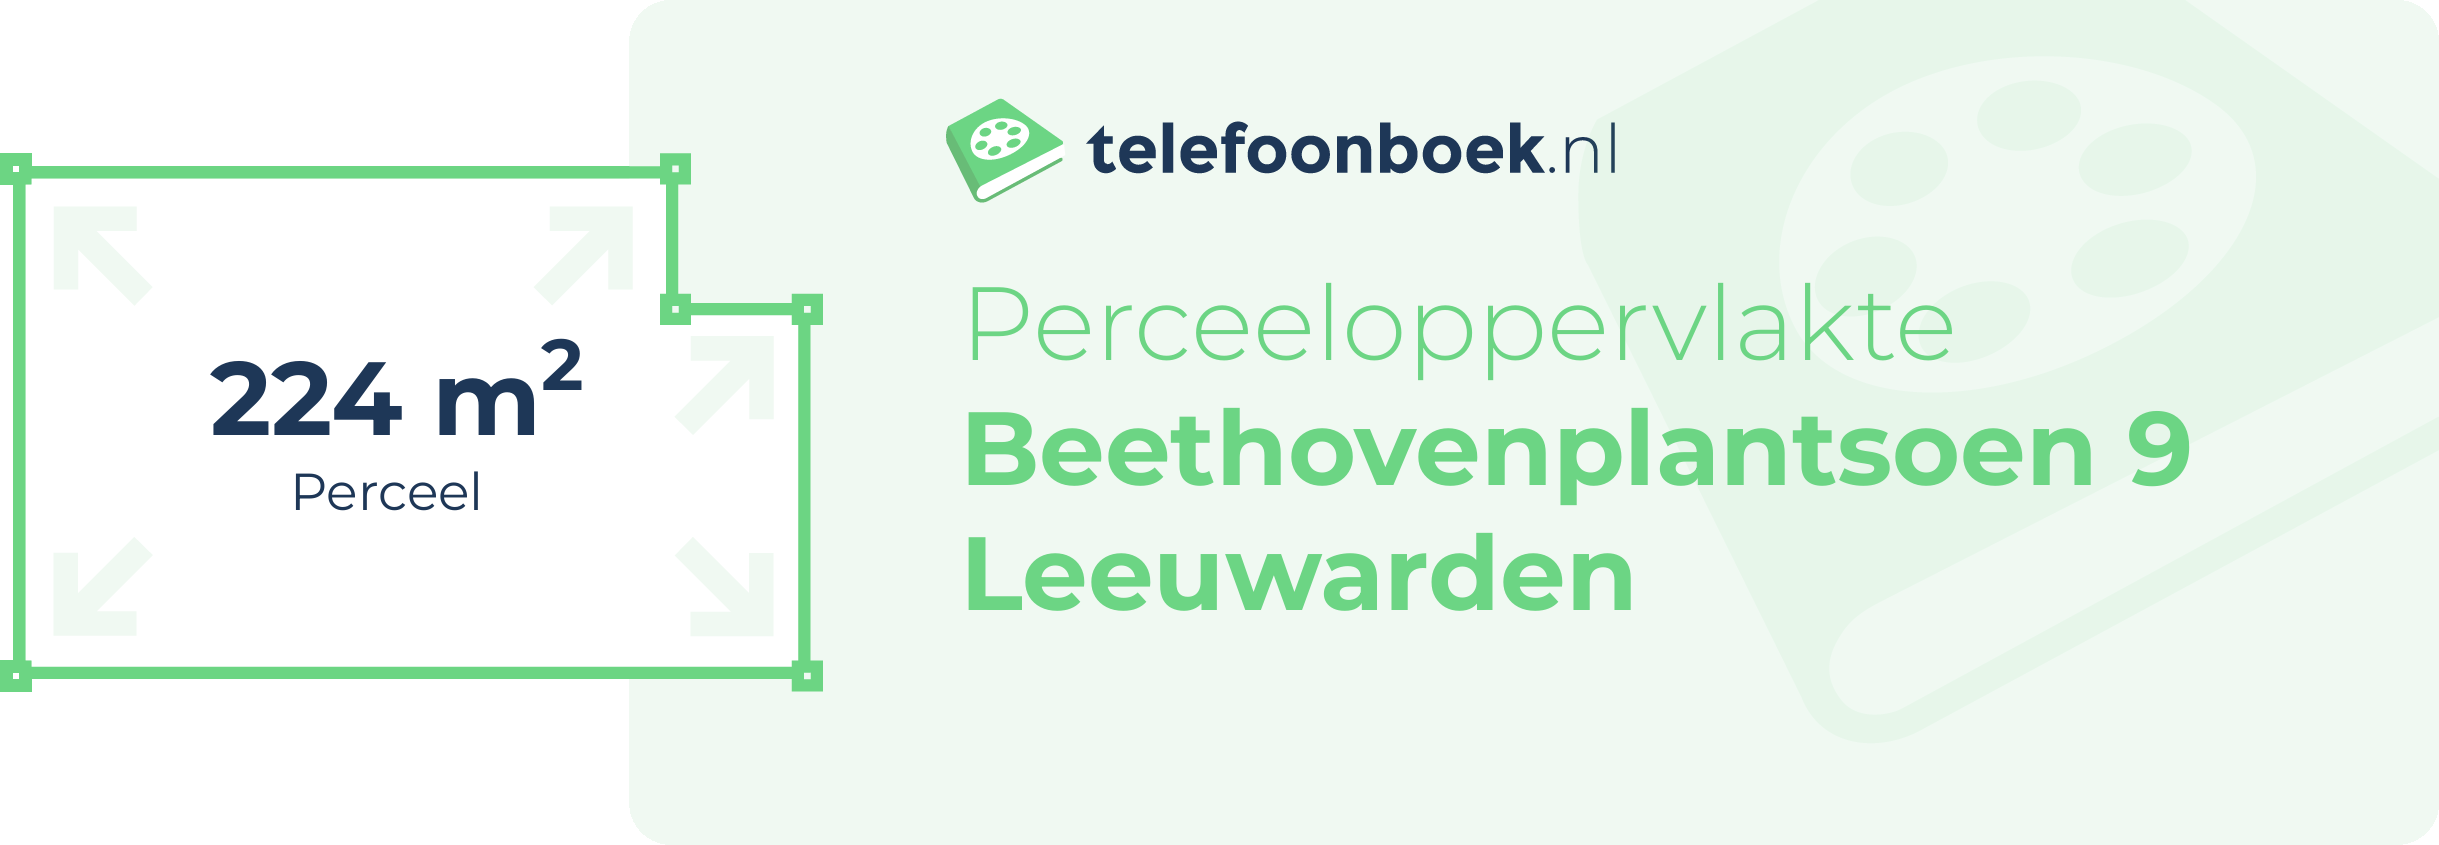 Perceeloppervlakte Beethovenplantsoen 9 Leeuwarden